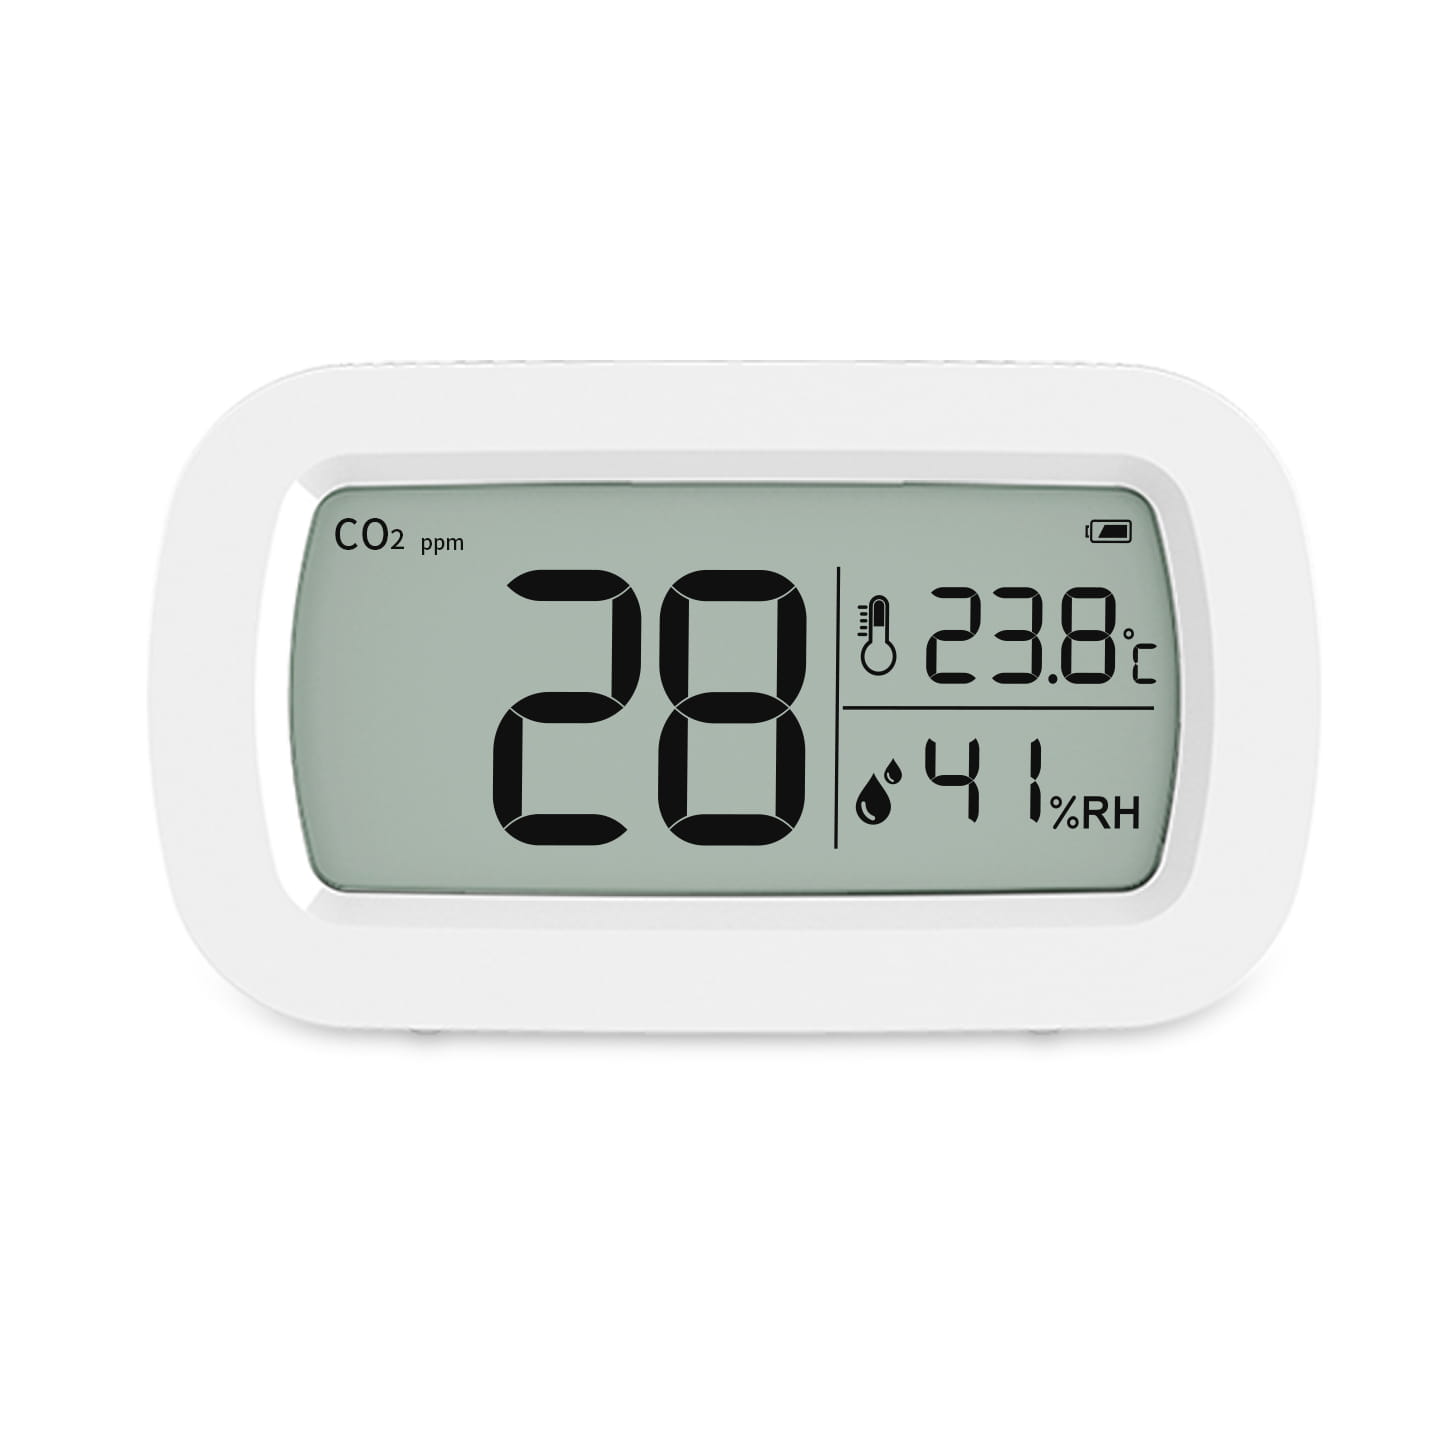 Co2 Meter | Co2 Meter Monitor |Carbon Dioxide Meter Co2